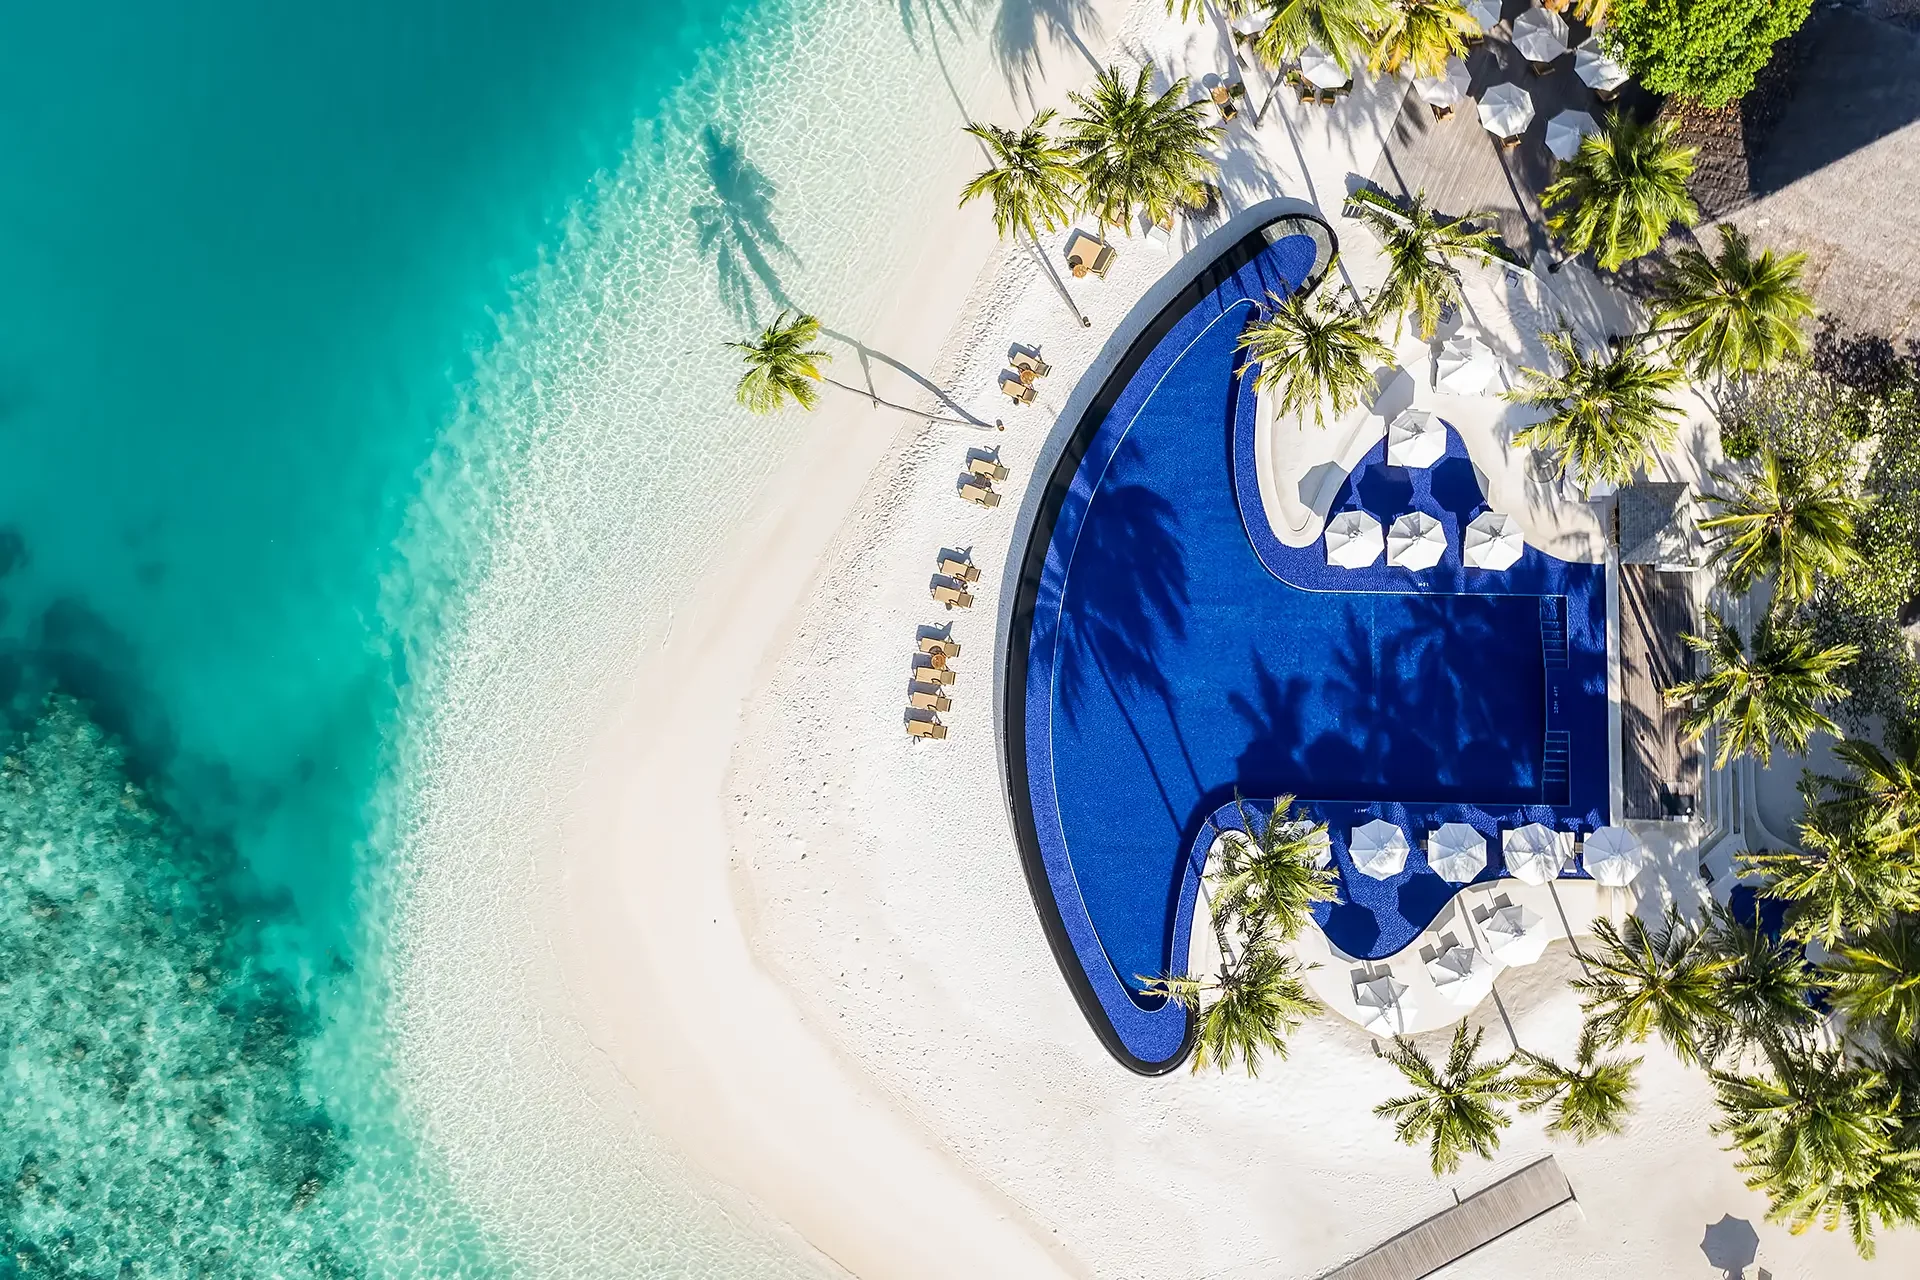 Pool am Strand einer Malediven Insel